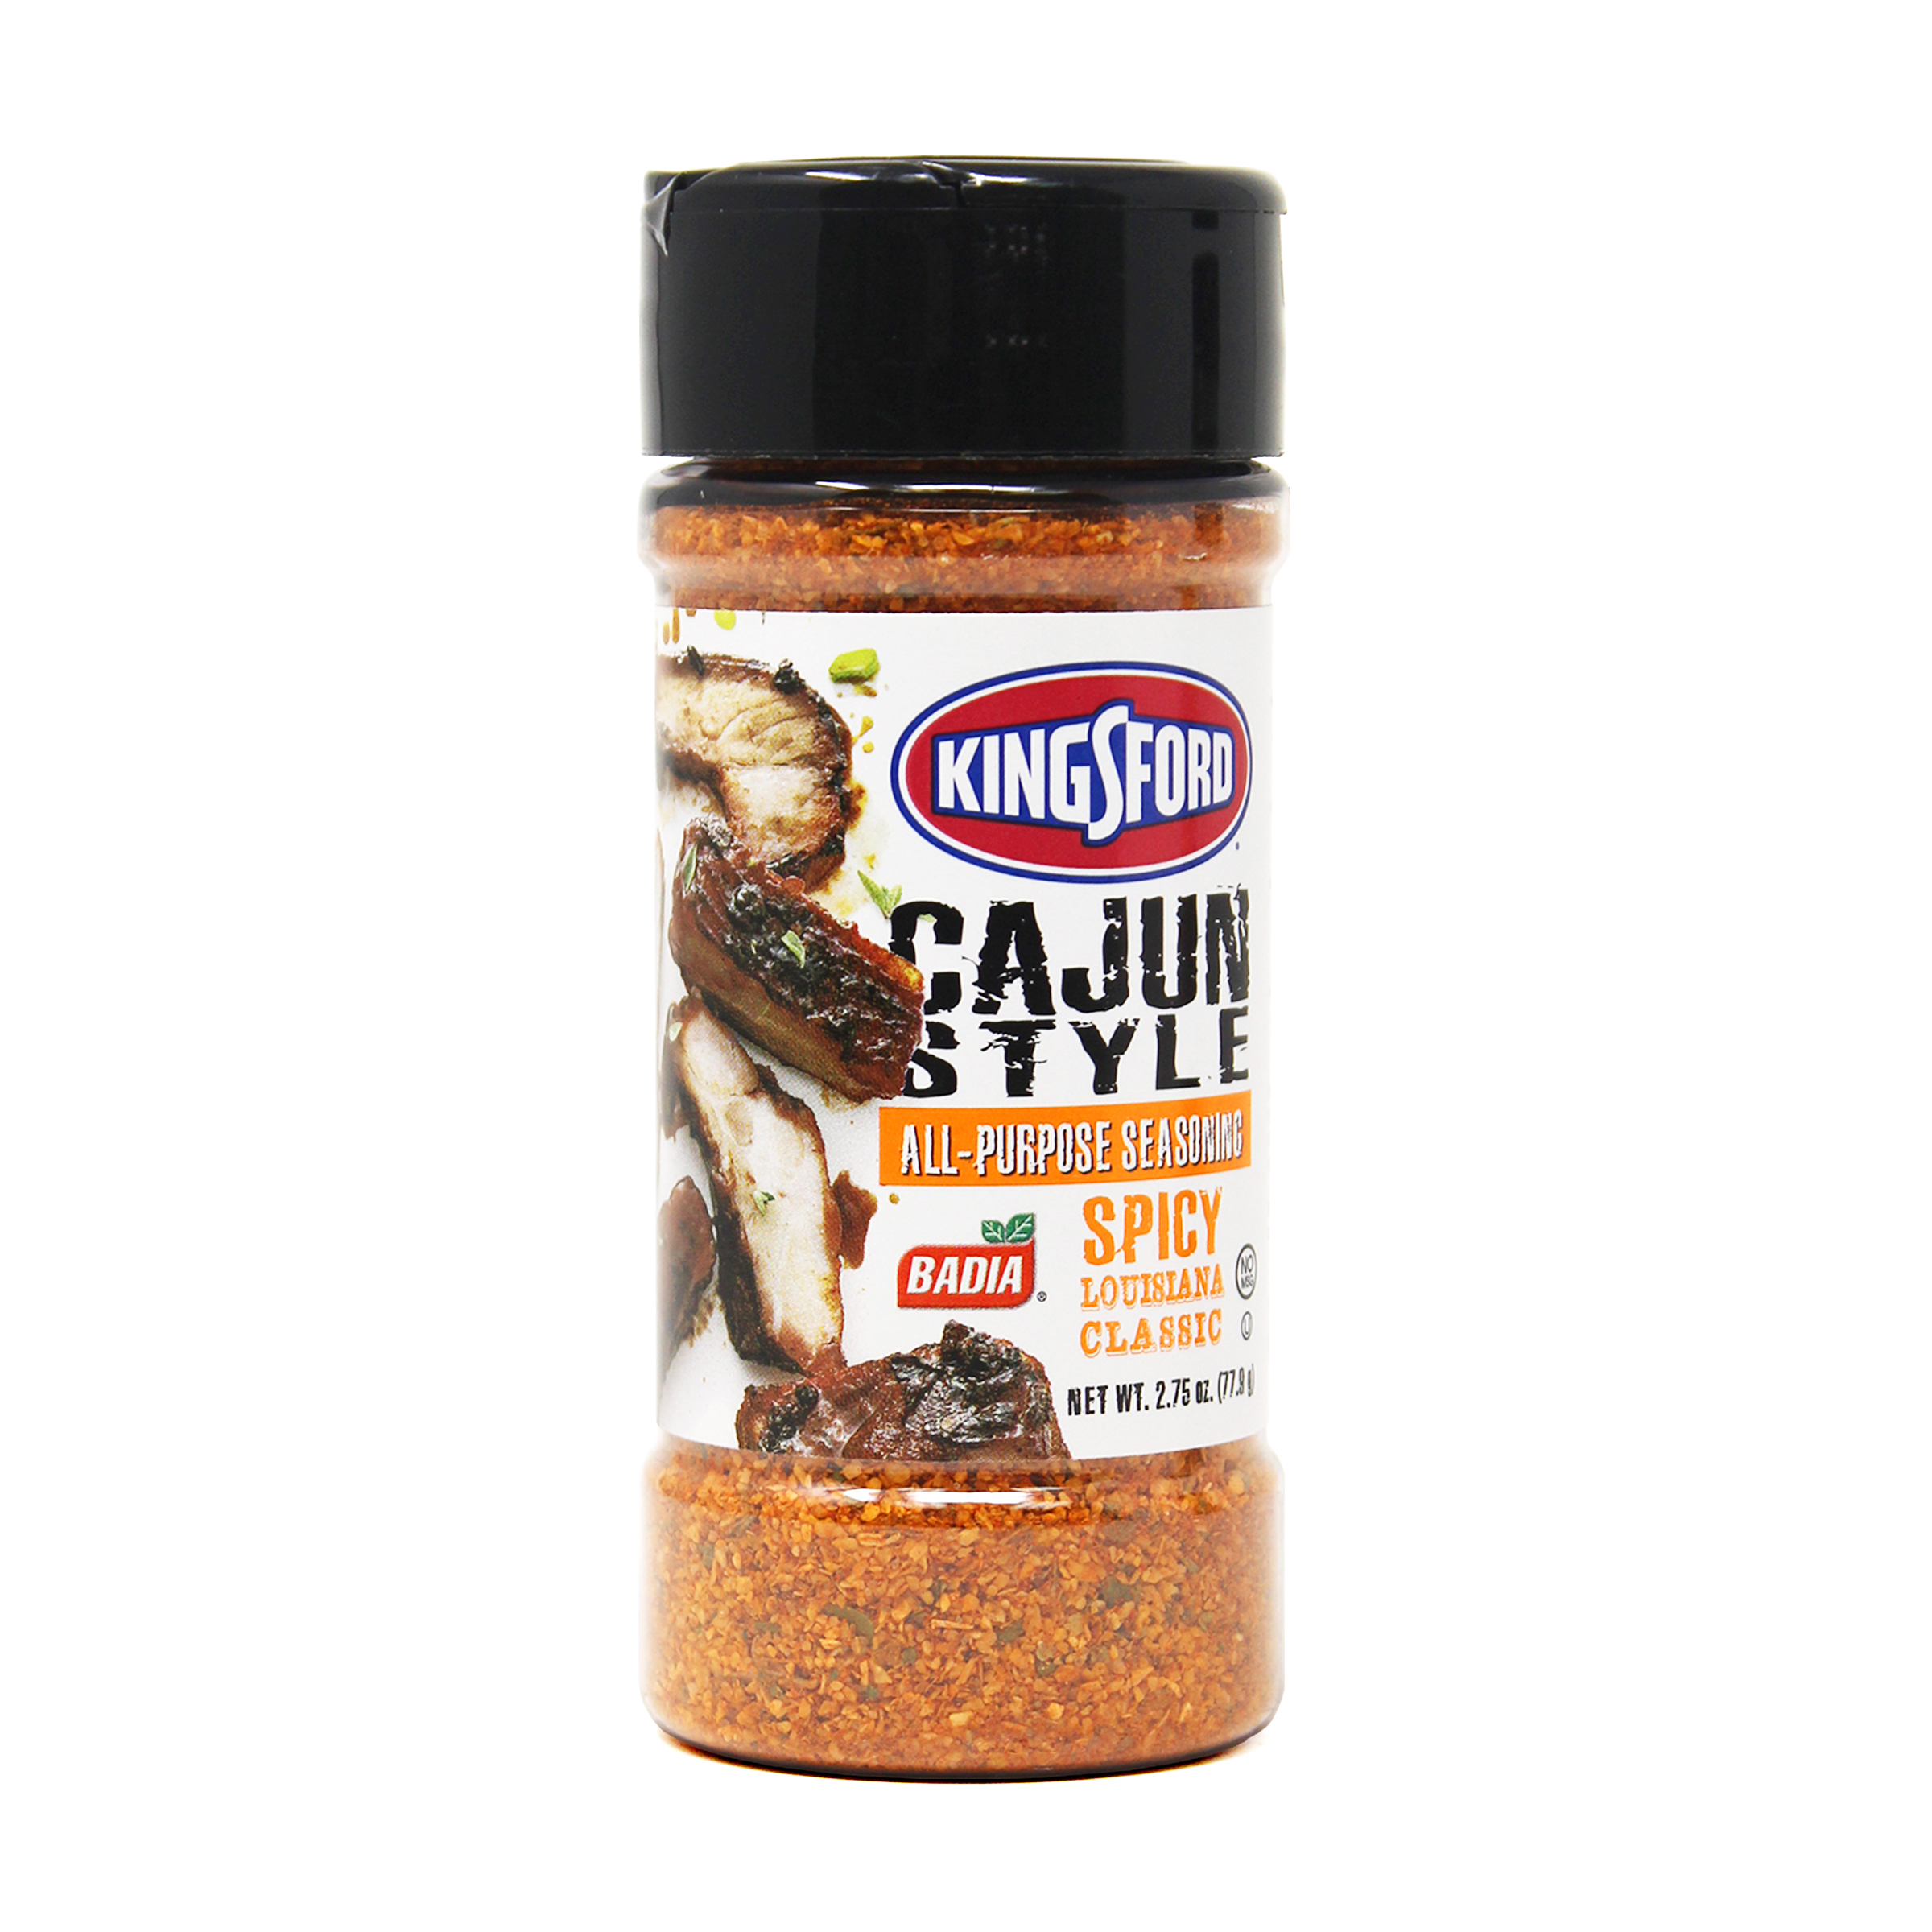 Cajun Seasoning Blend Spice – Infinite30